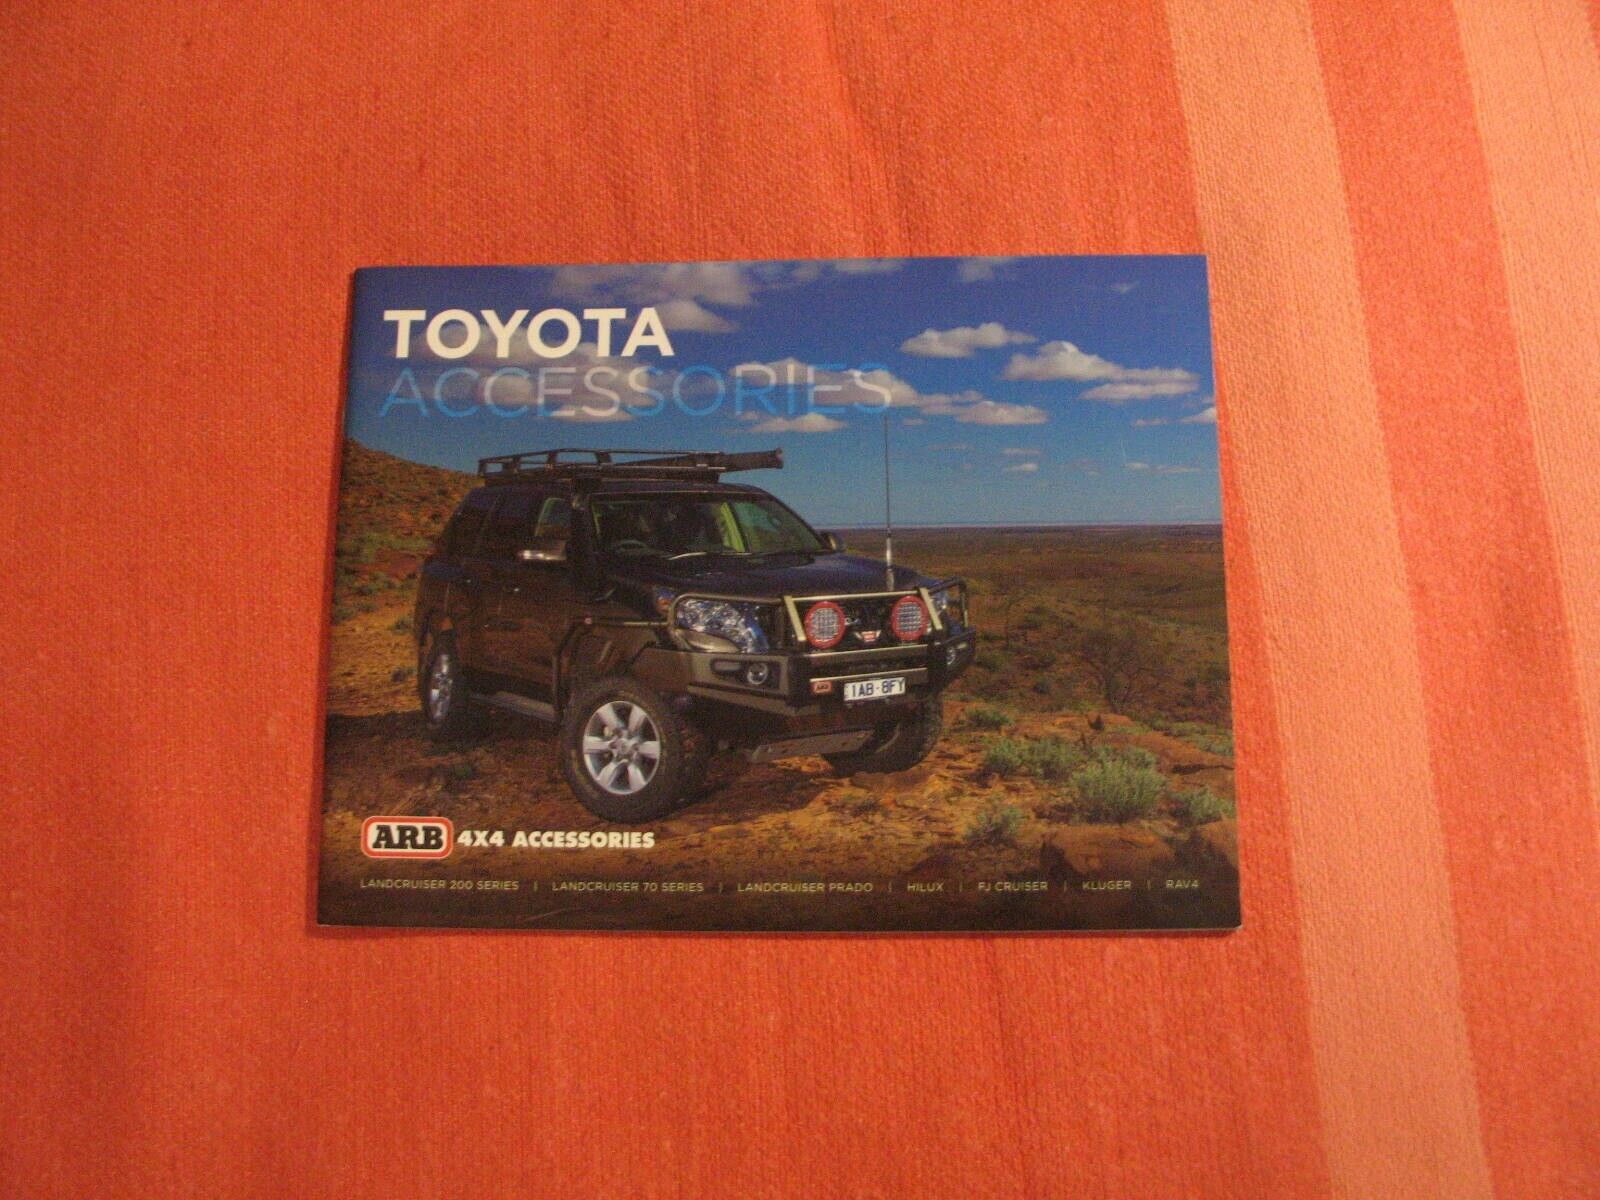 Toyota 4x4 ARB accessories brochure